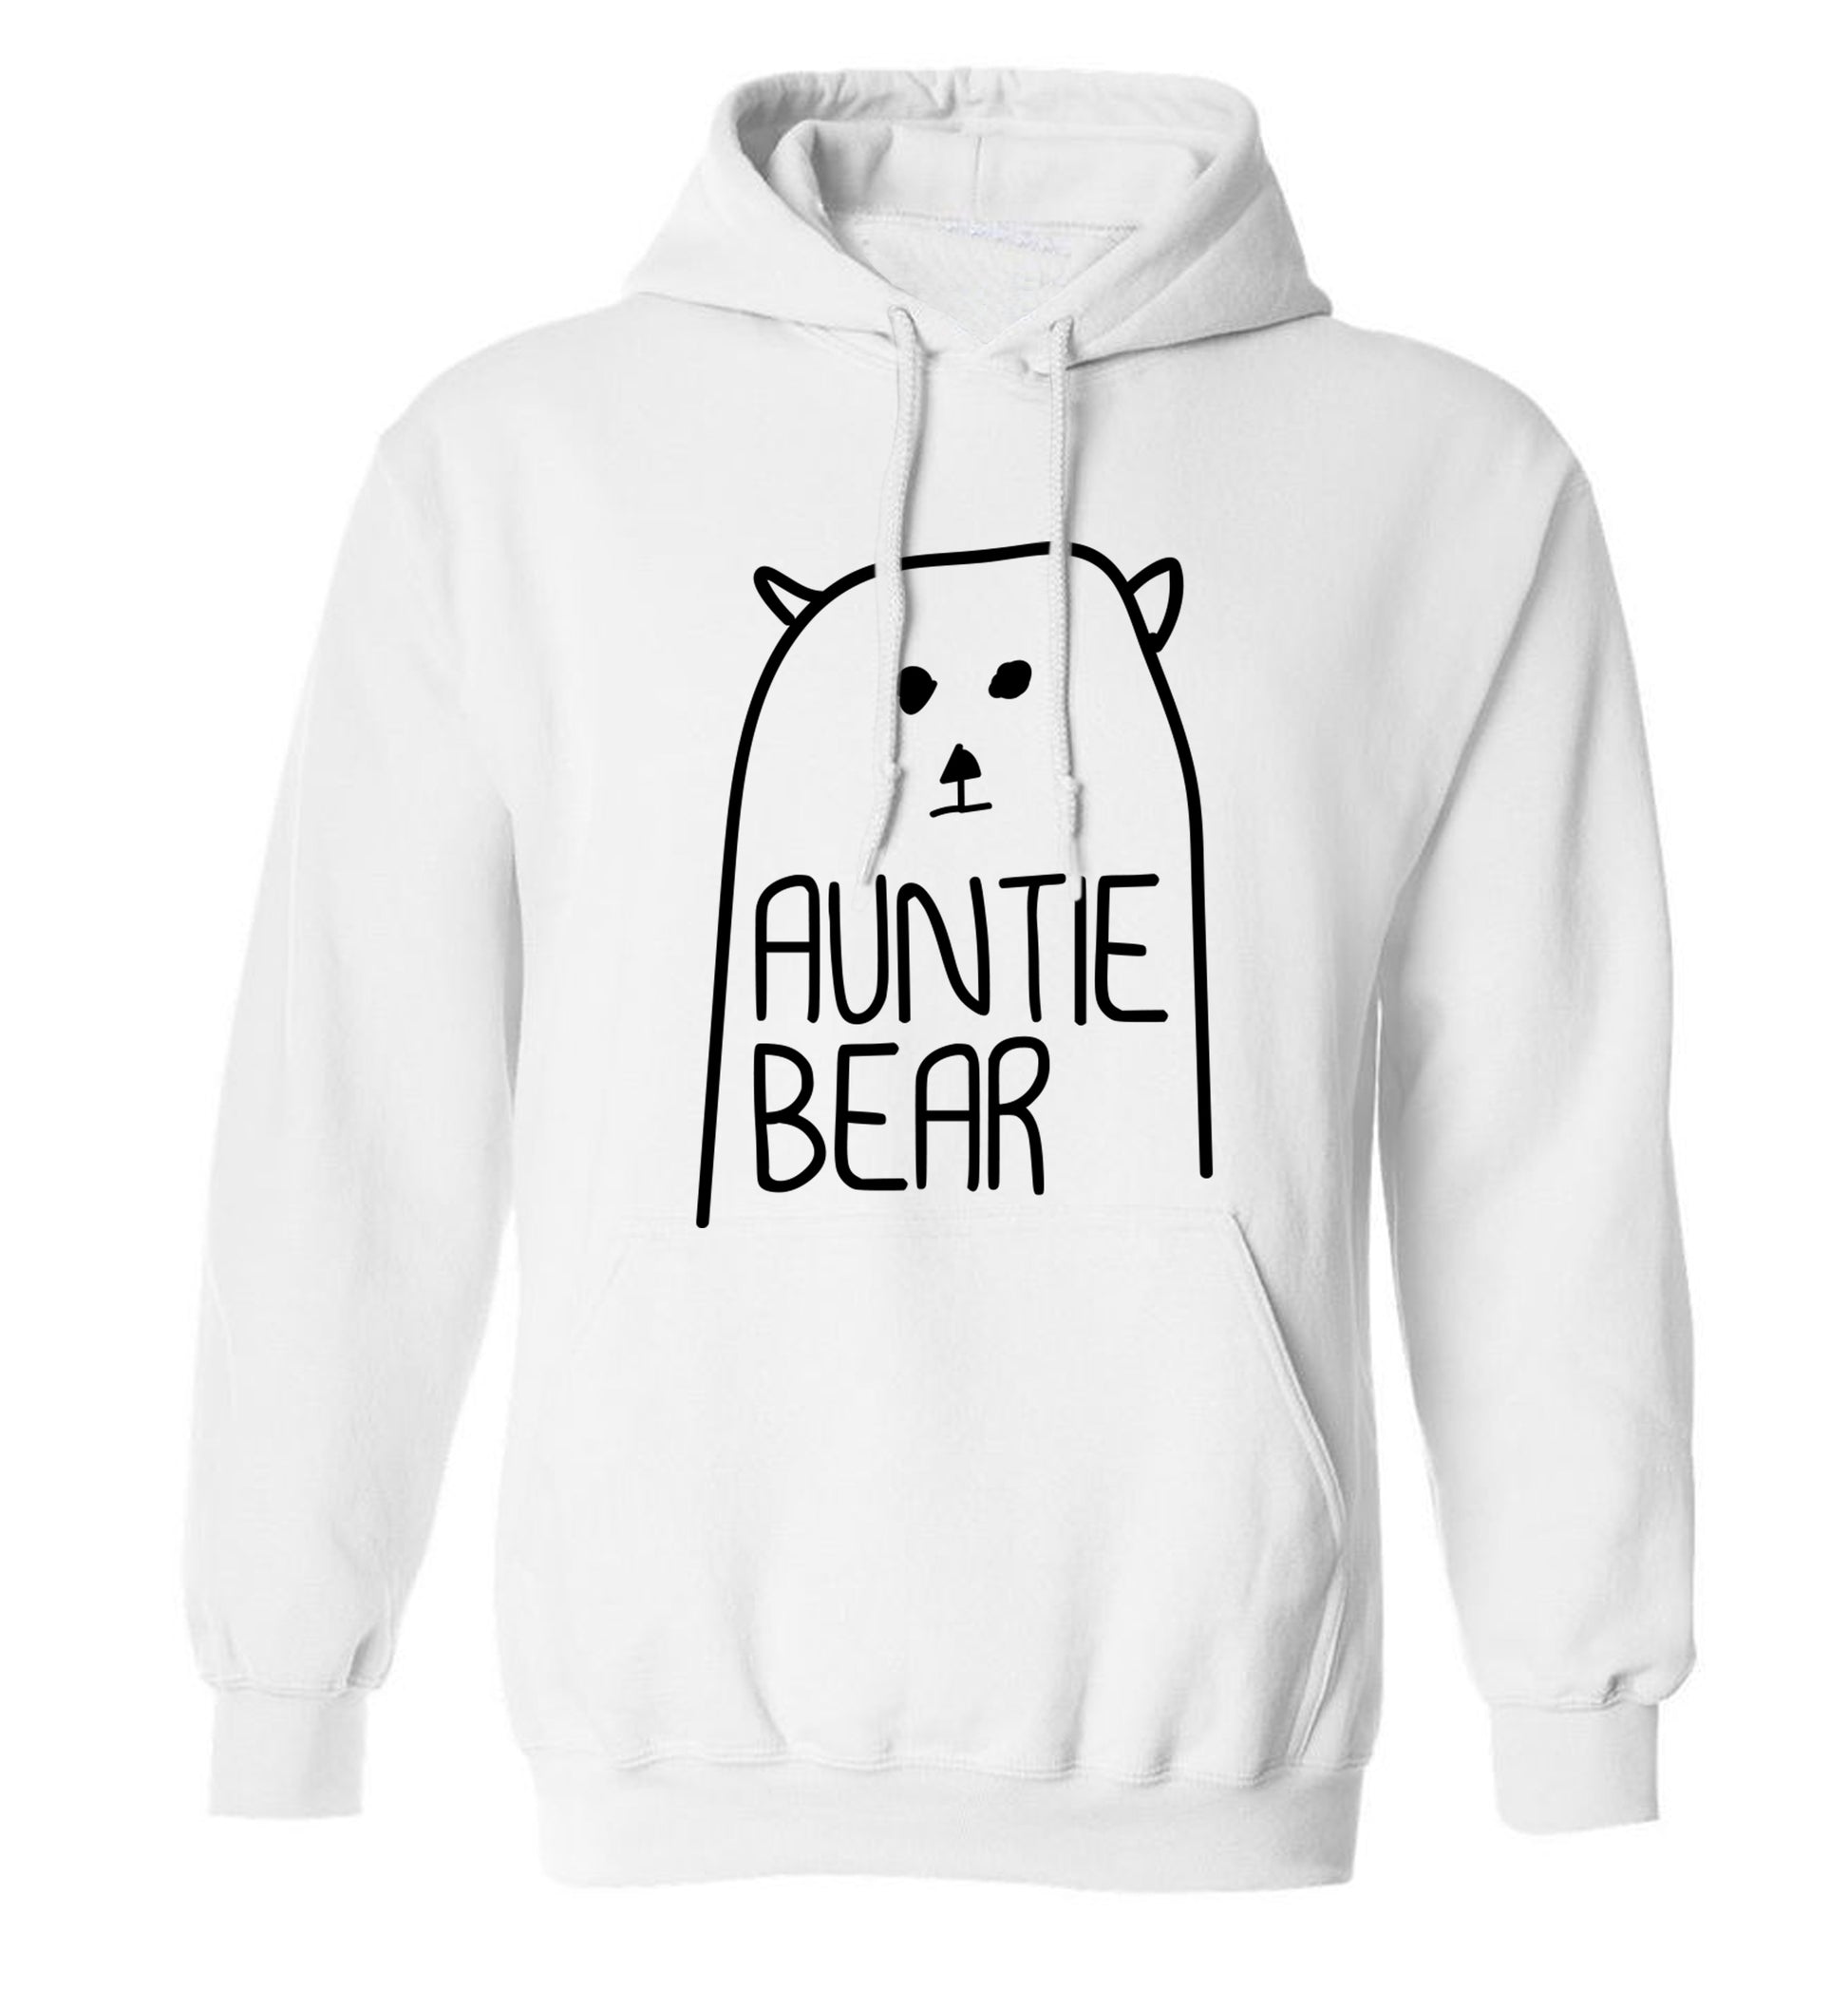 Auntie bear adults unisex white hoodie 2XL